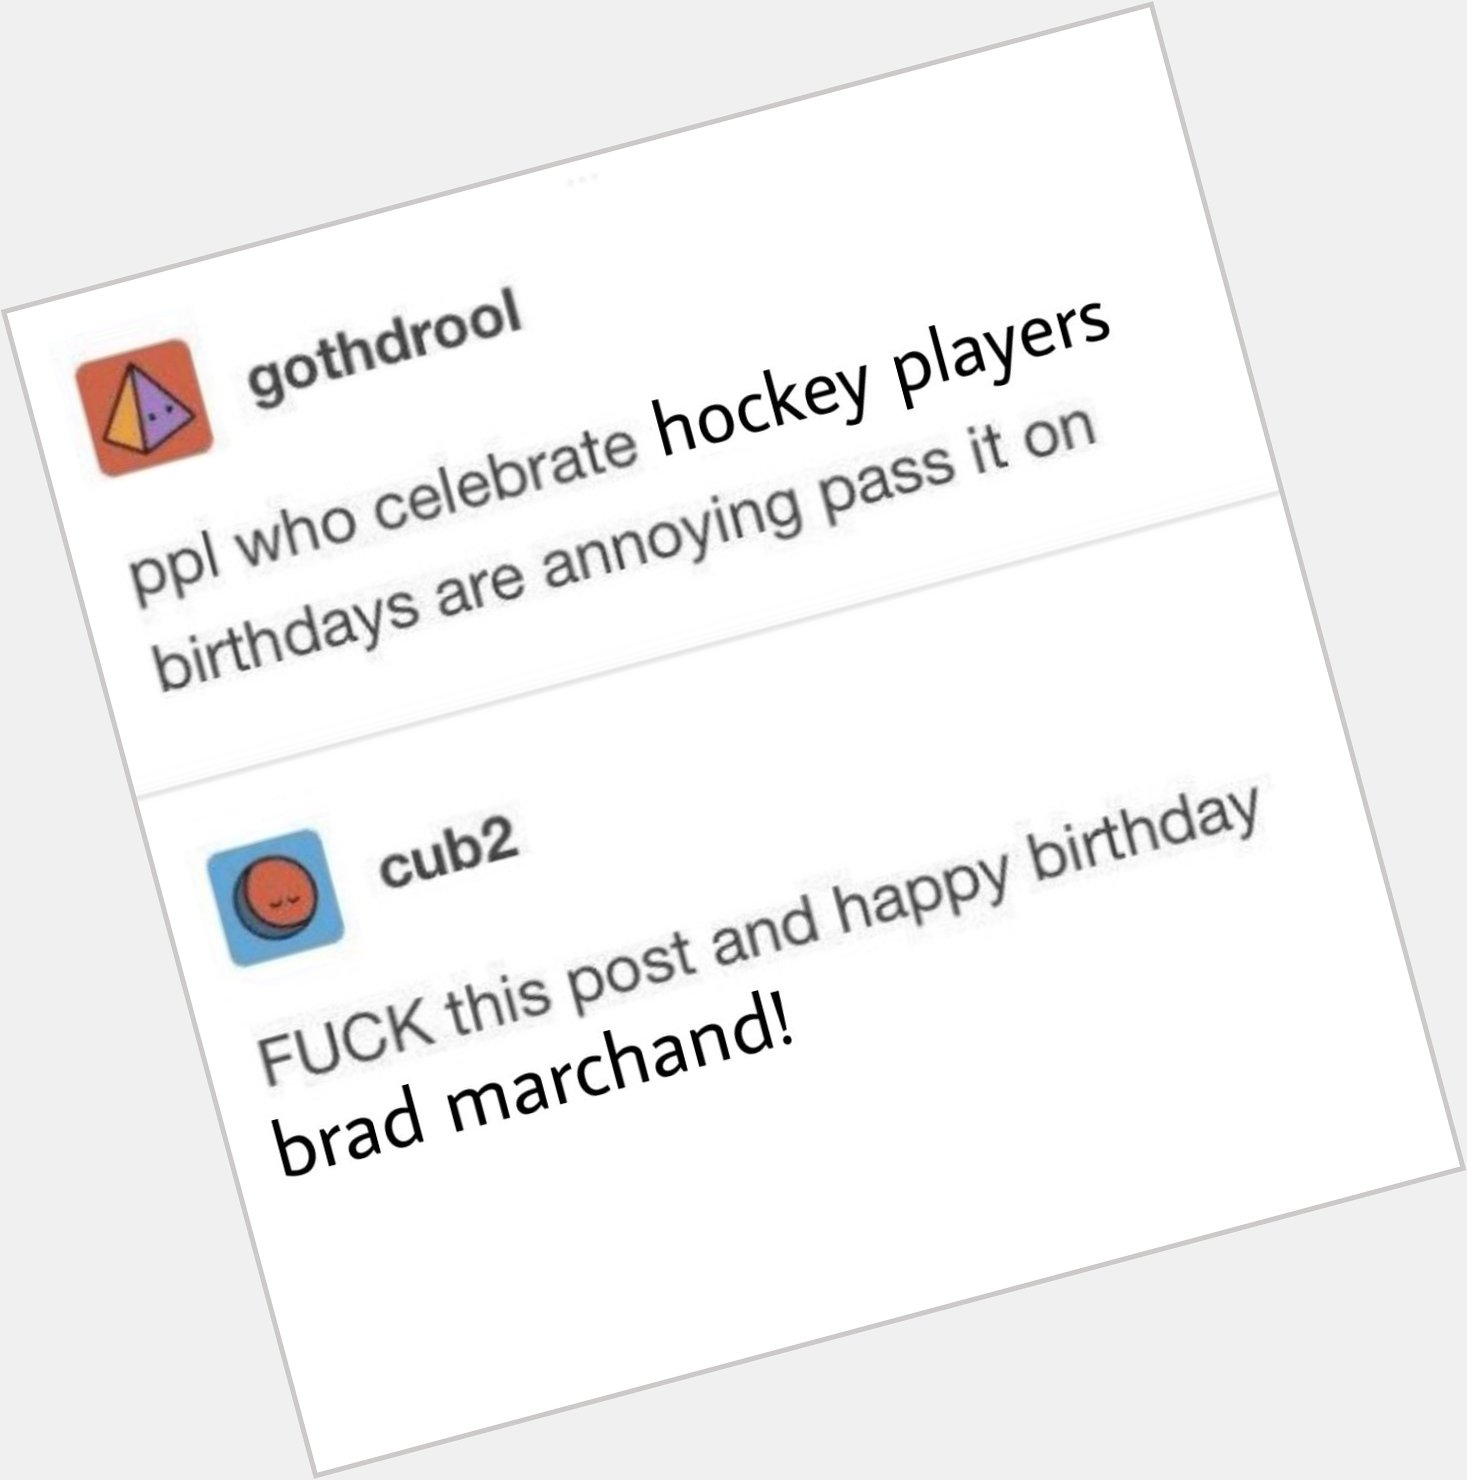 Happy birthday brad marchand! 